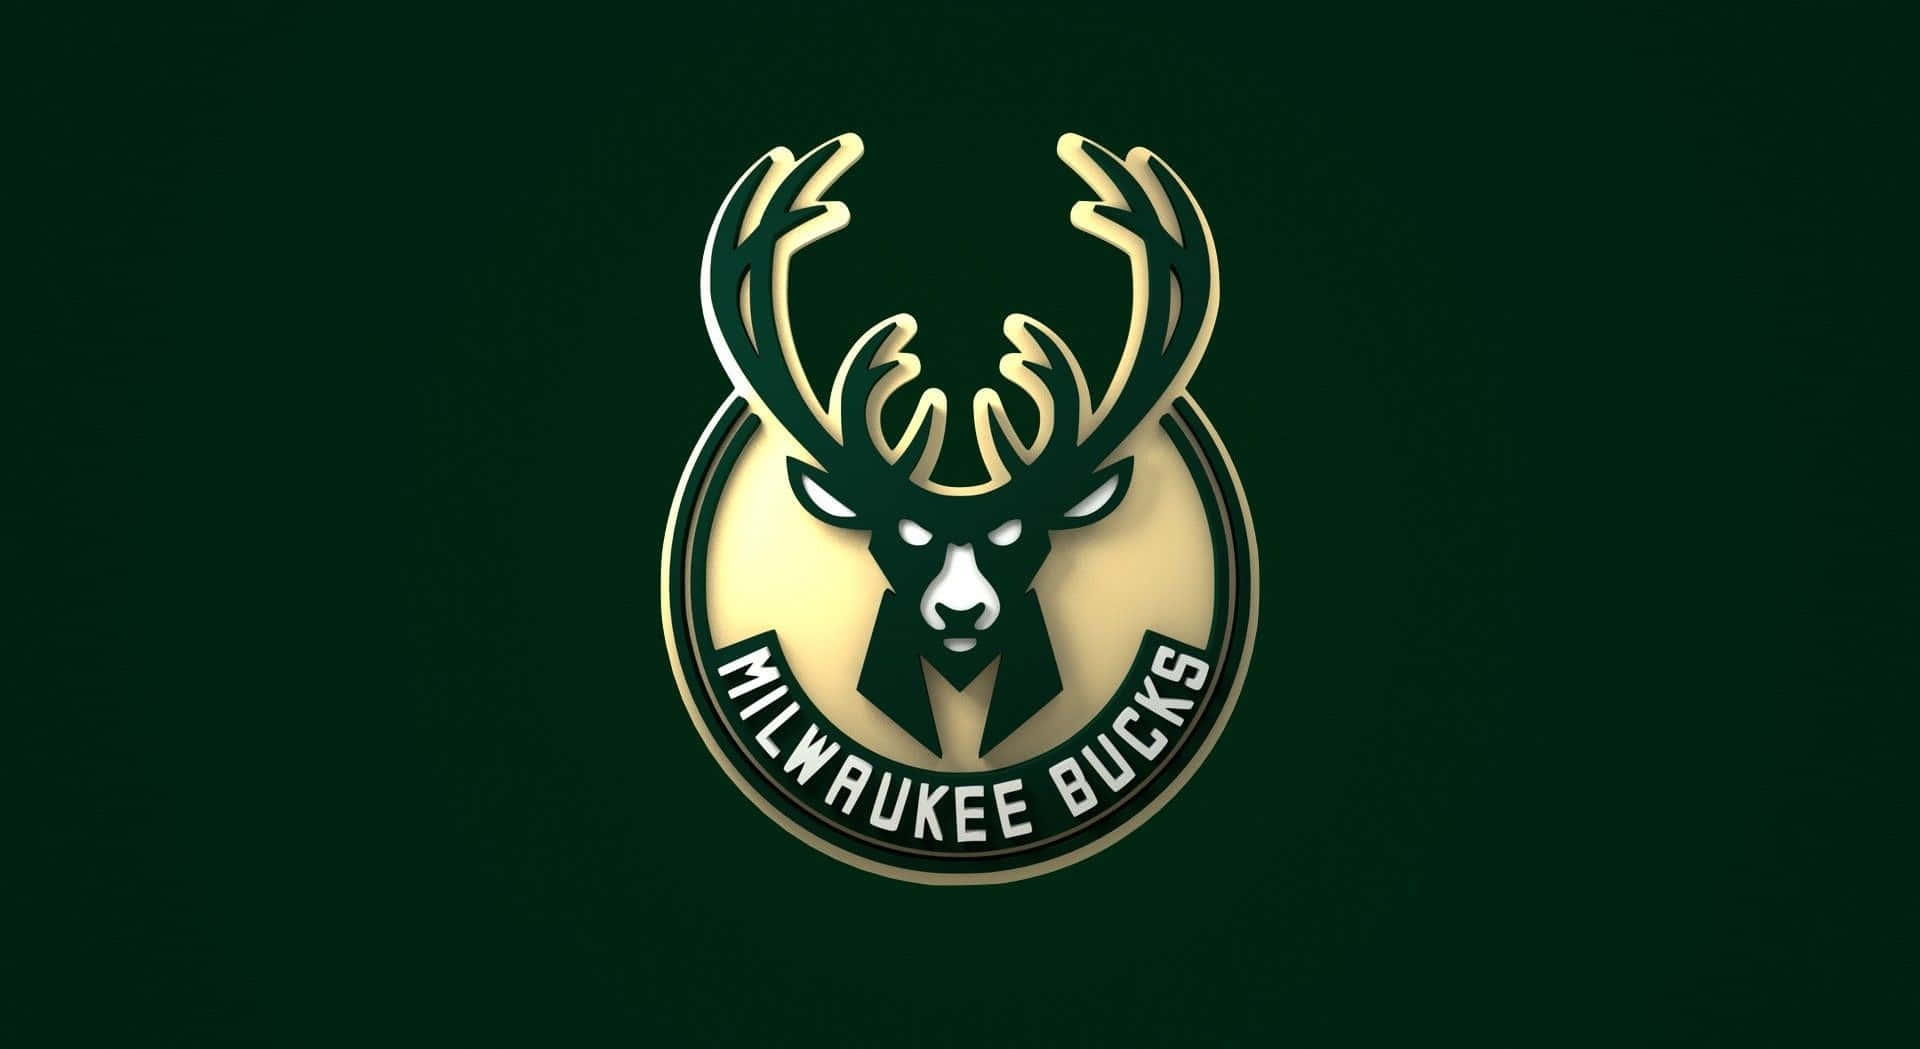 Ellogotipo De Los Milwaukee Bucks, Que Representa A Un Icónico Equipo Deportivo En La Nba. Fondo de pantalla